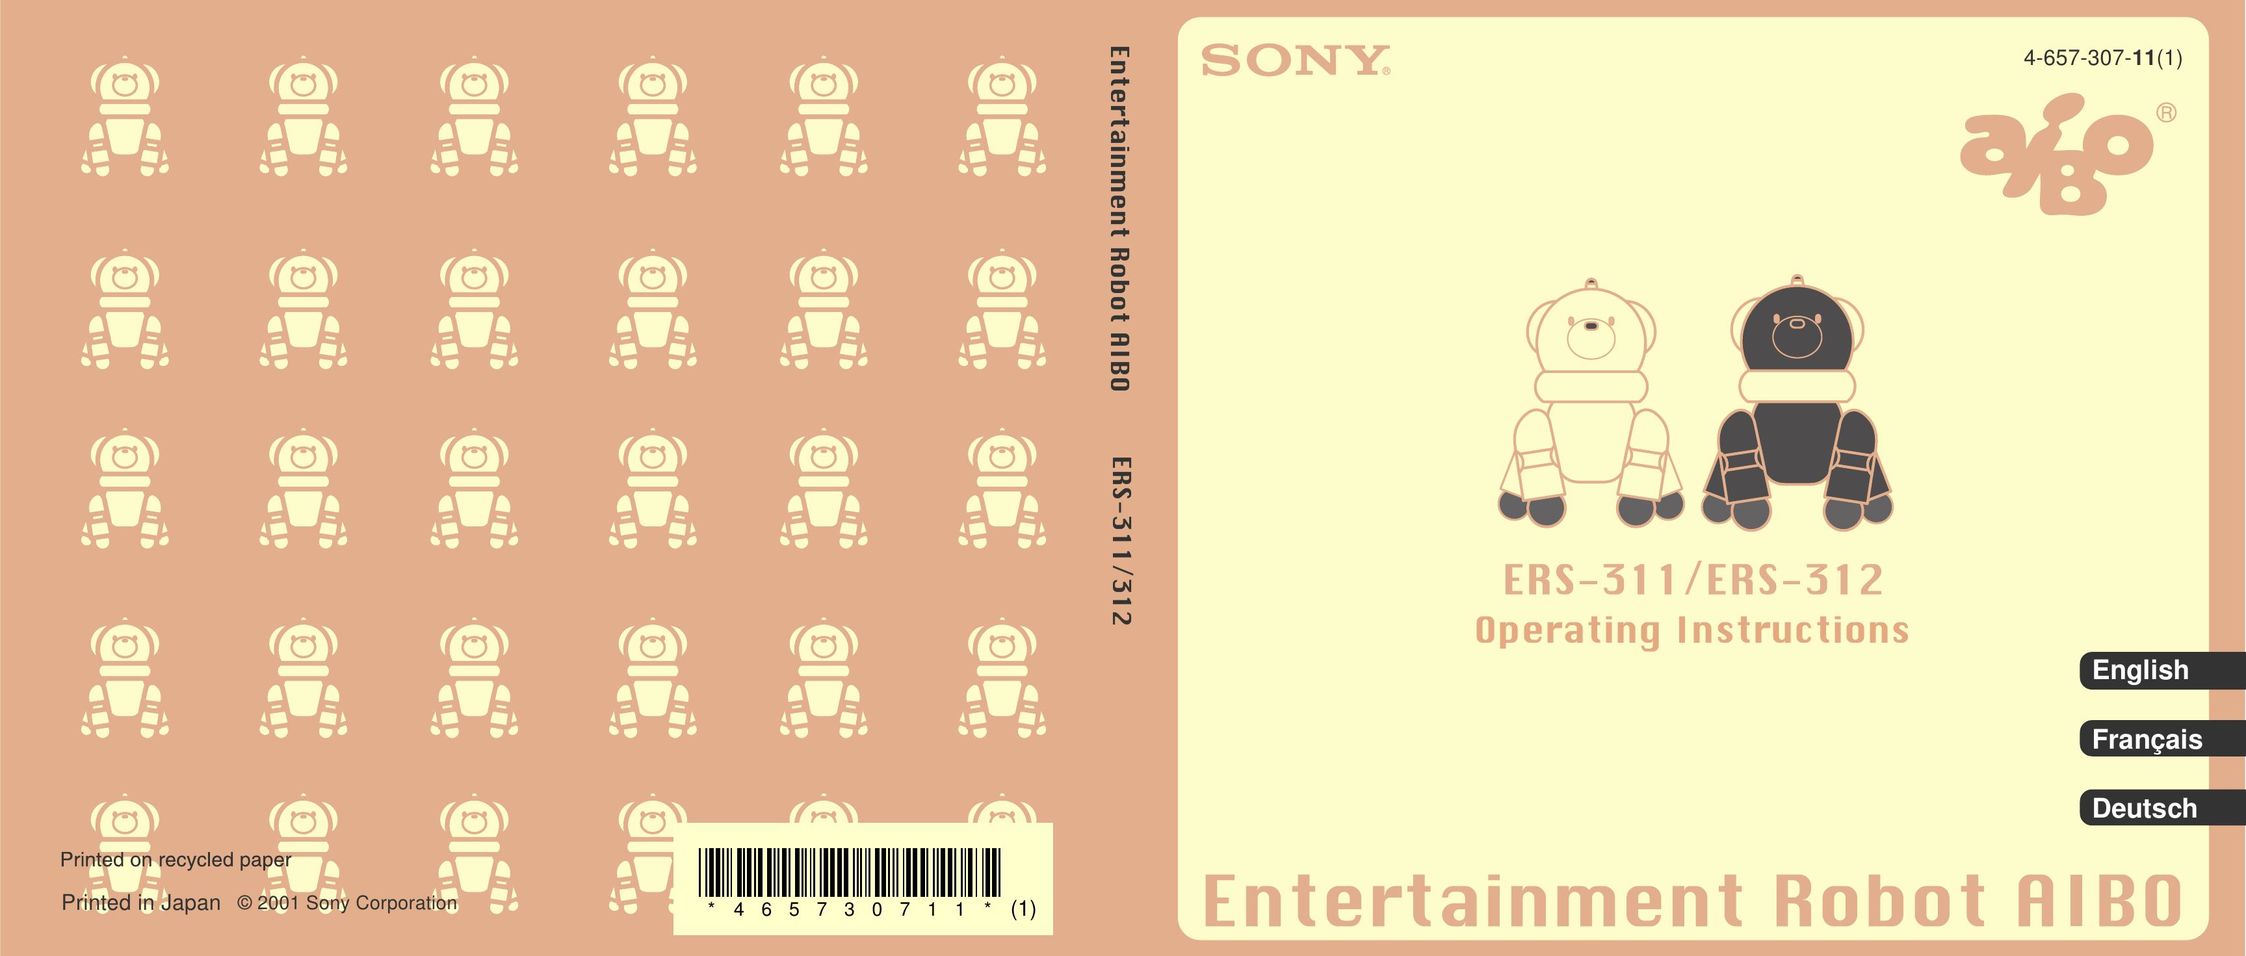 Sony ERS-311 Robotics User Manual